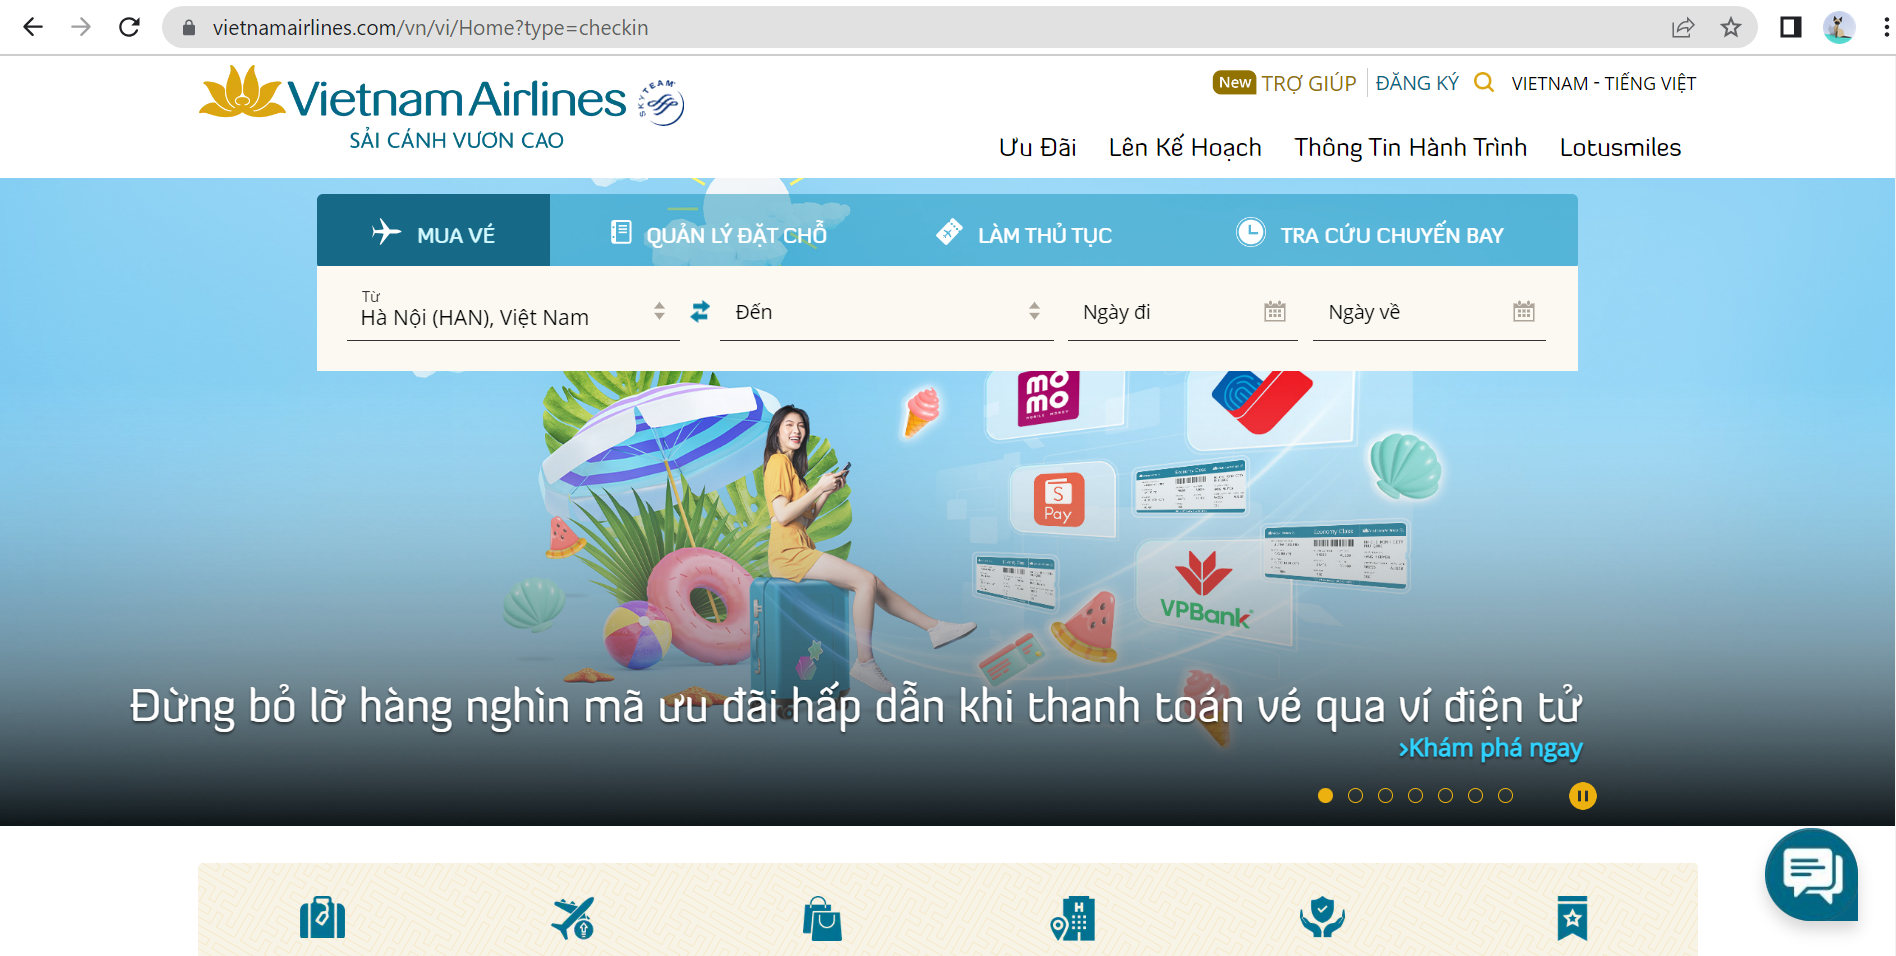 Giao diện check in online trên website Vietnam Airlines